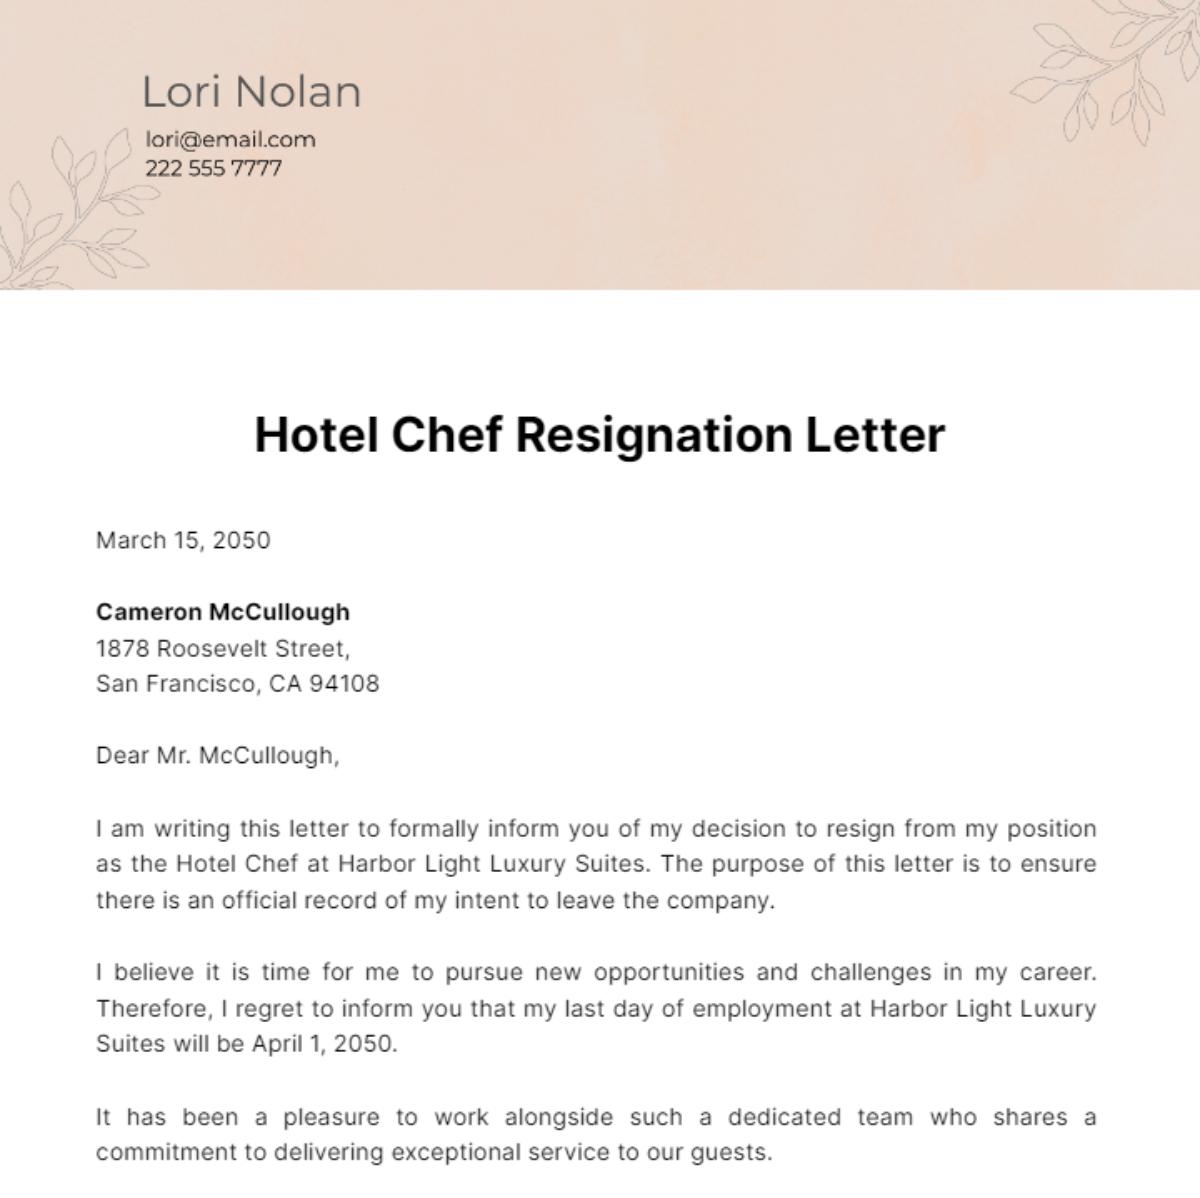 Hotel Chef Resignation Letter Template